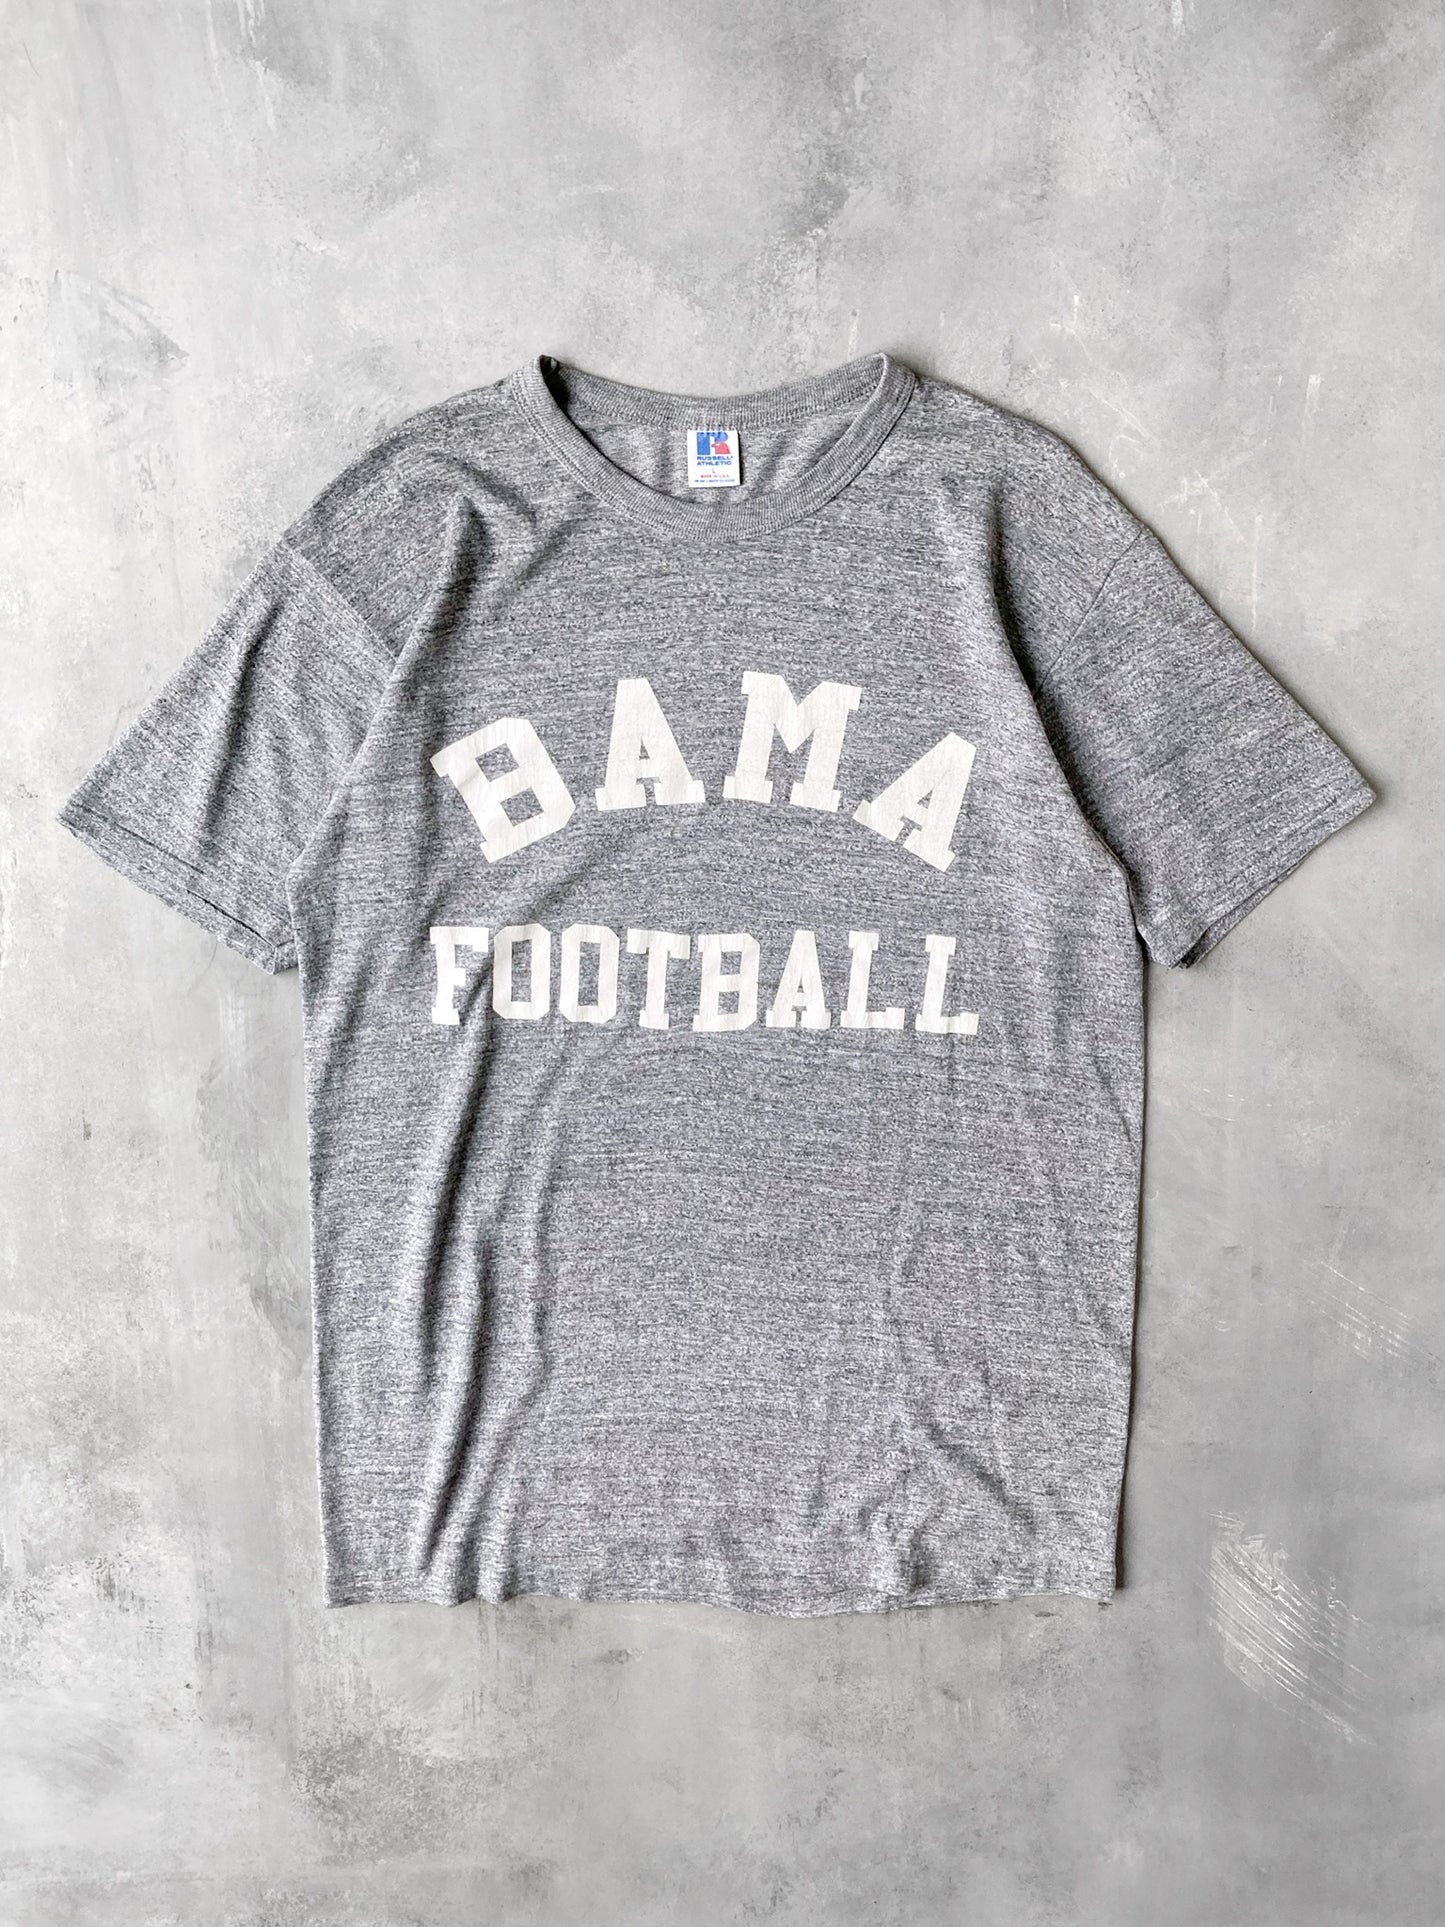 University of Alabama Football T-Shirt 90's - Large